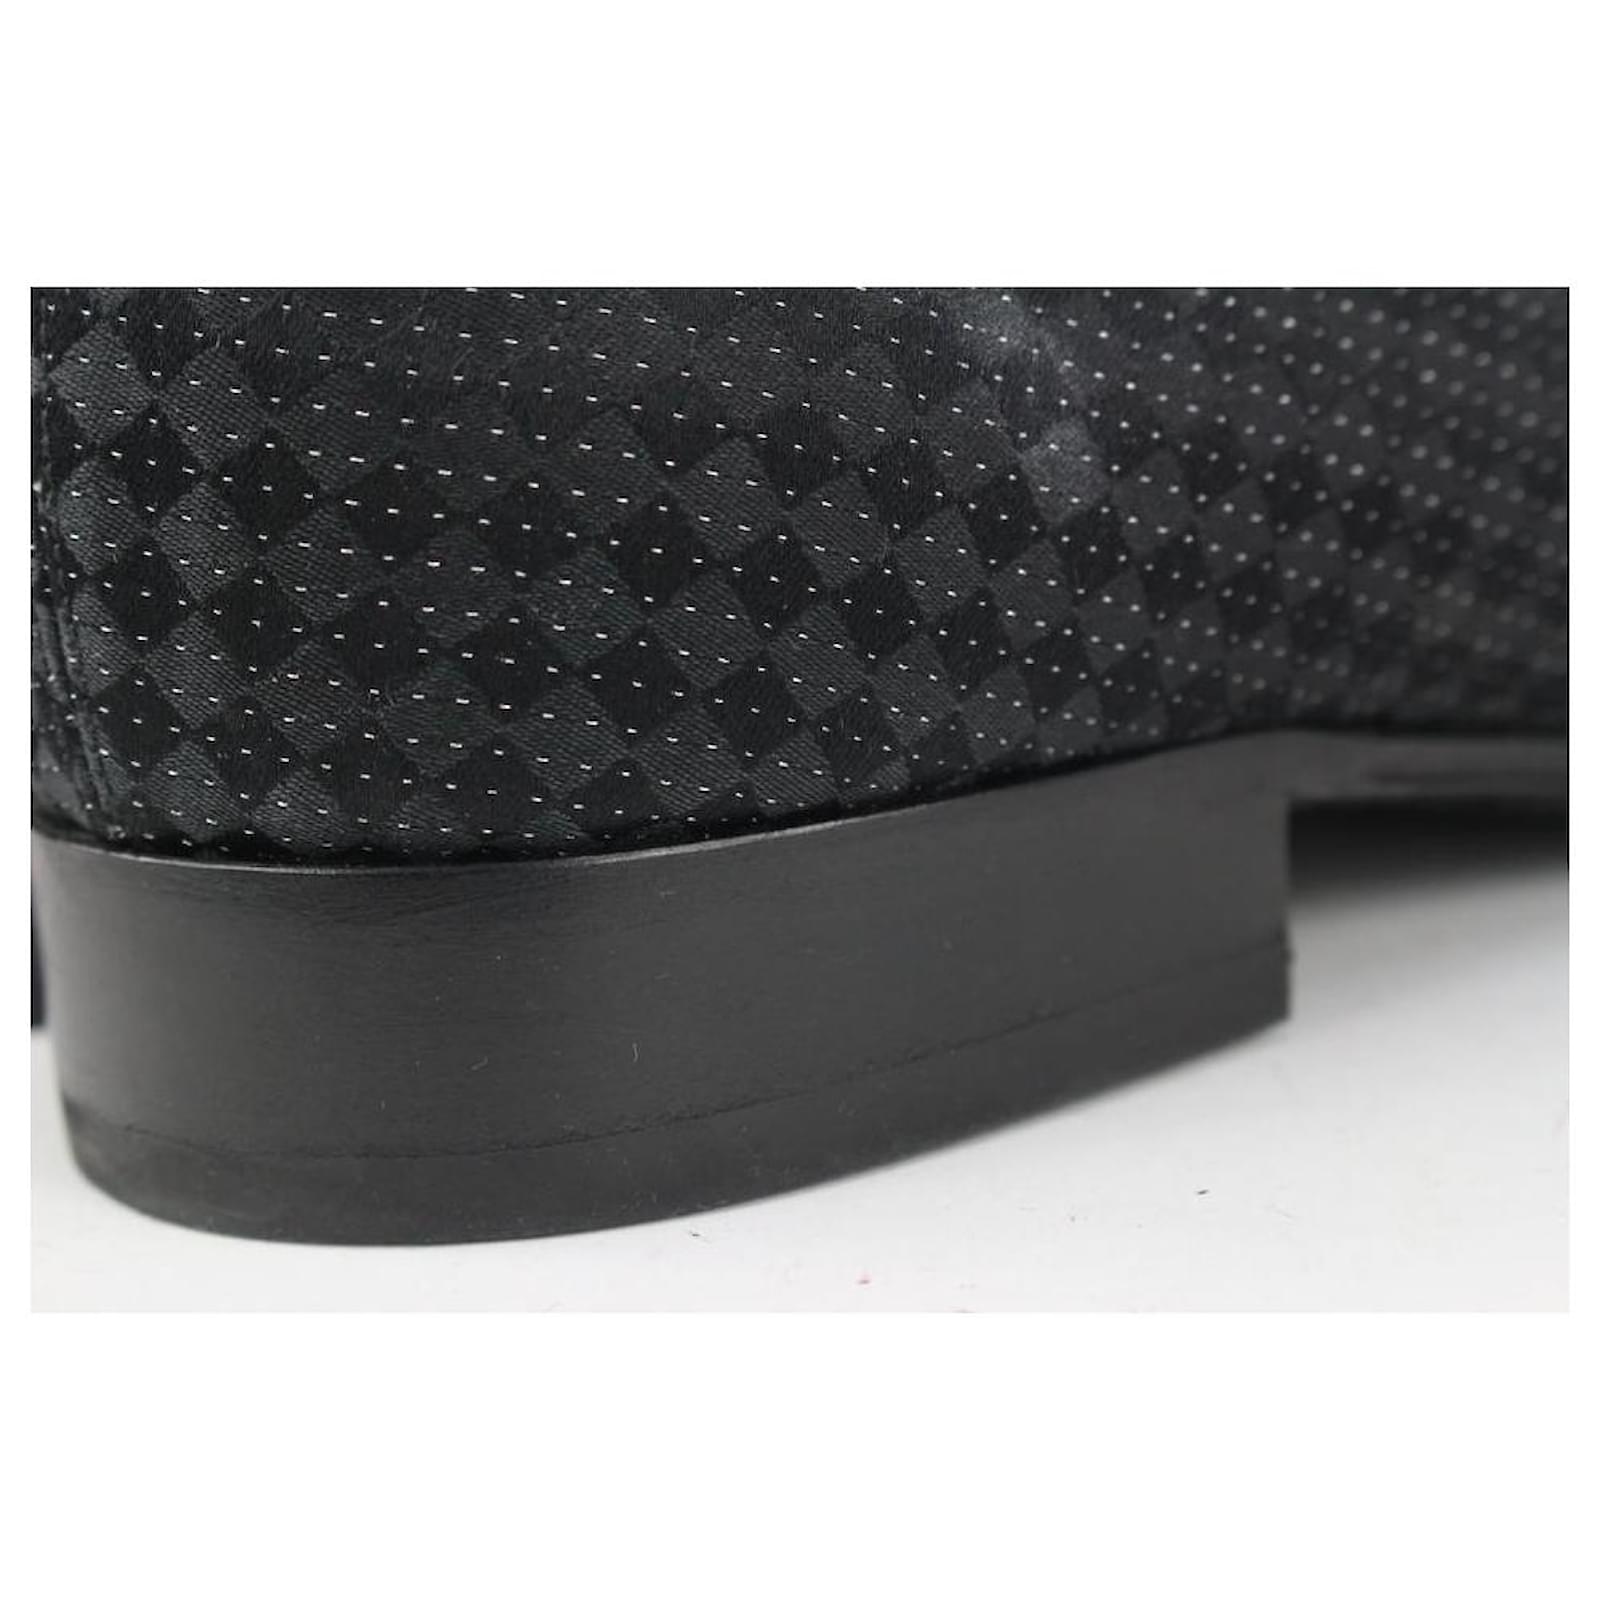 Louis Vuitton Mens US 9 Black Damier Sparkle Slip On Loafer Dress